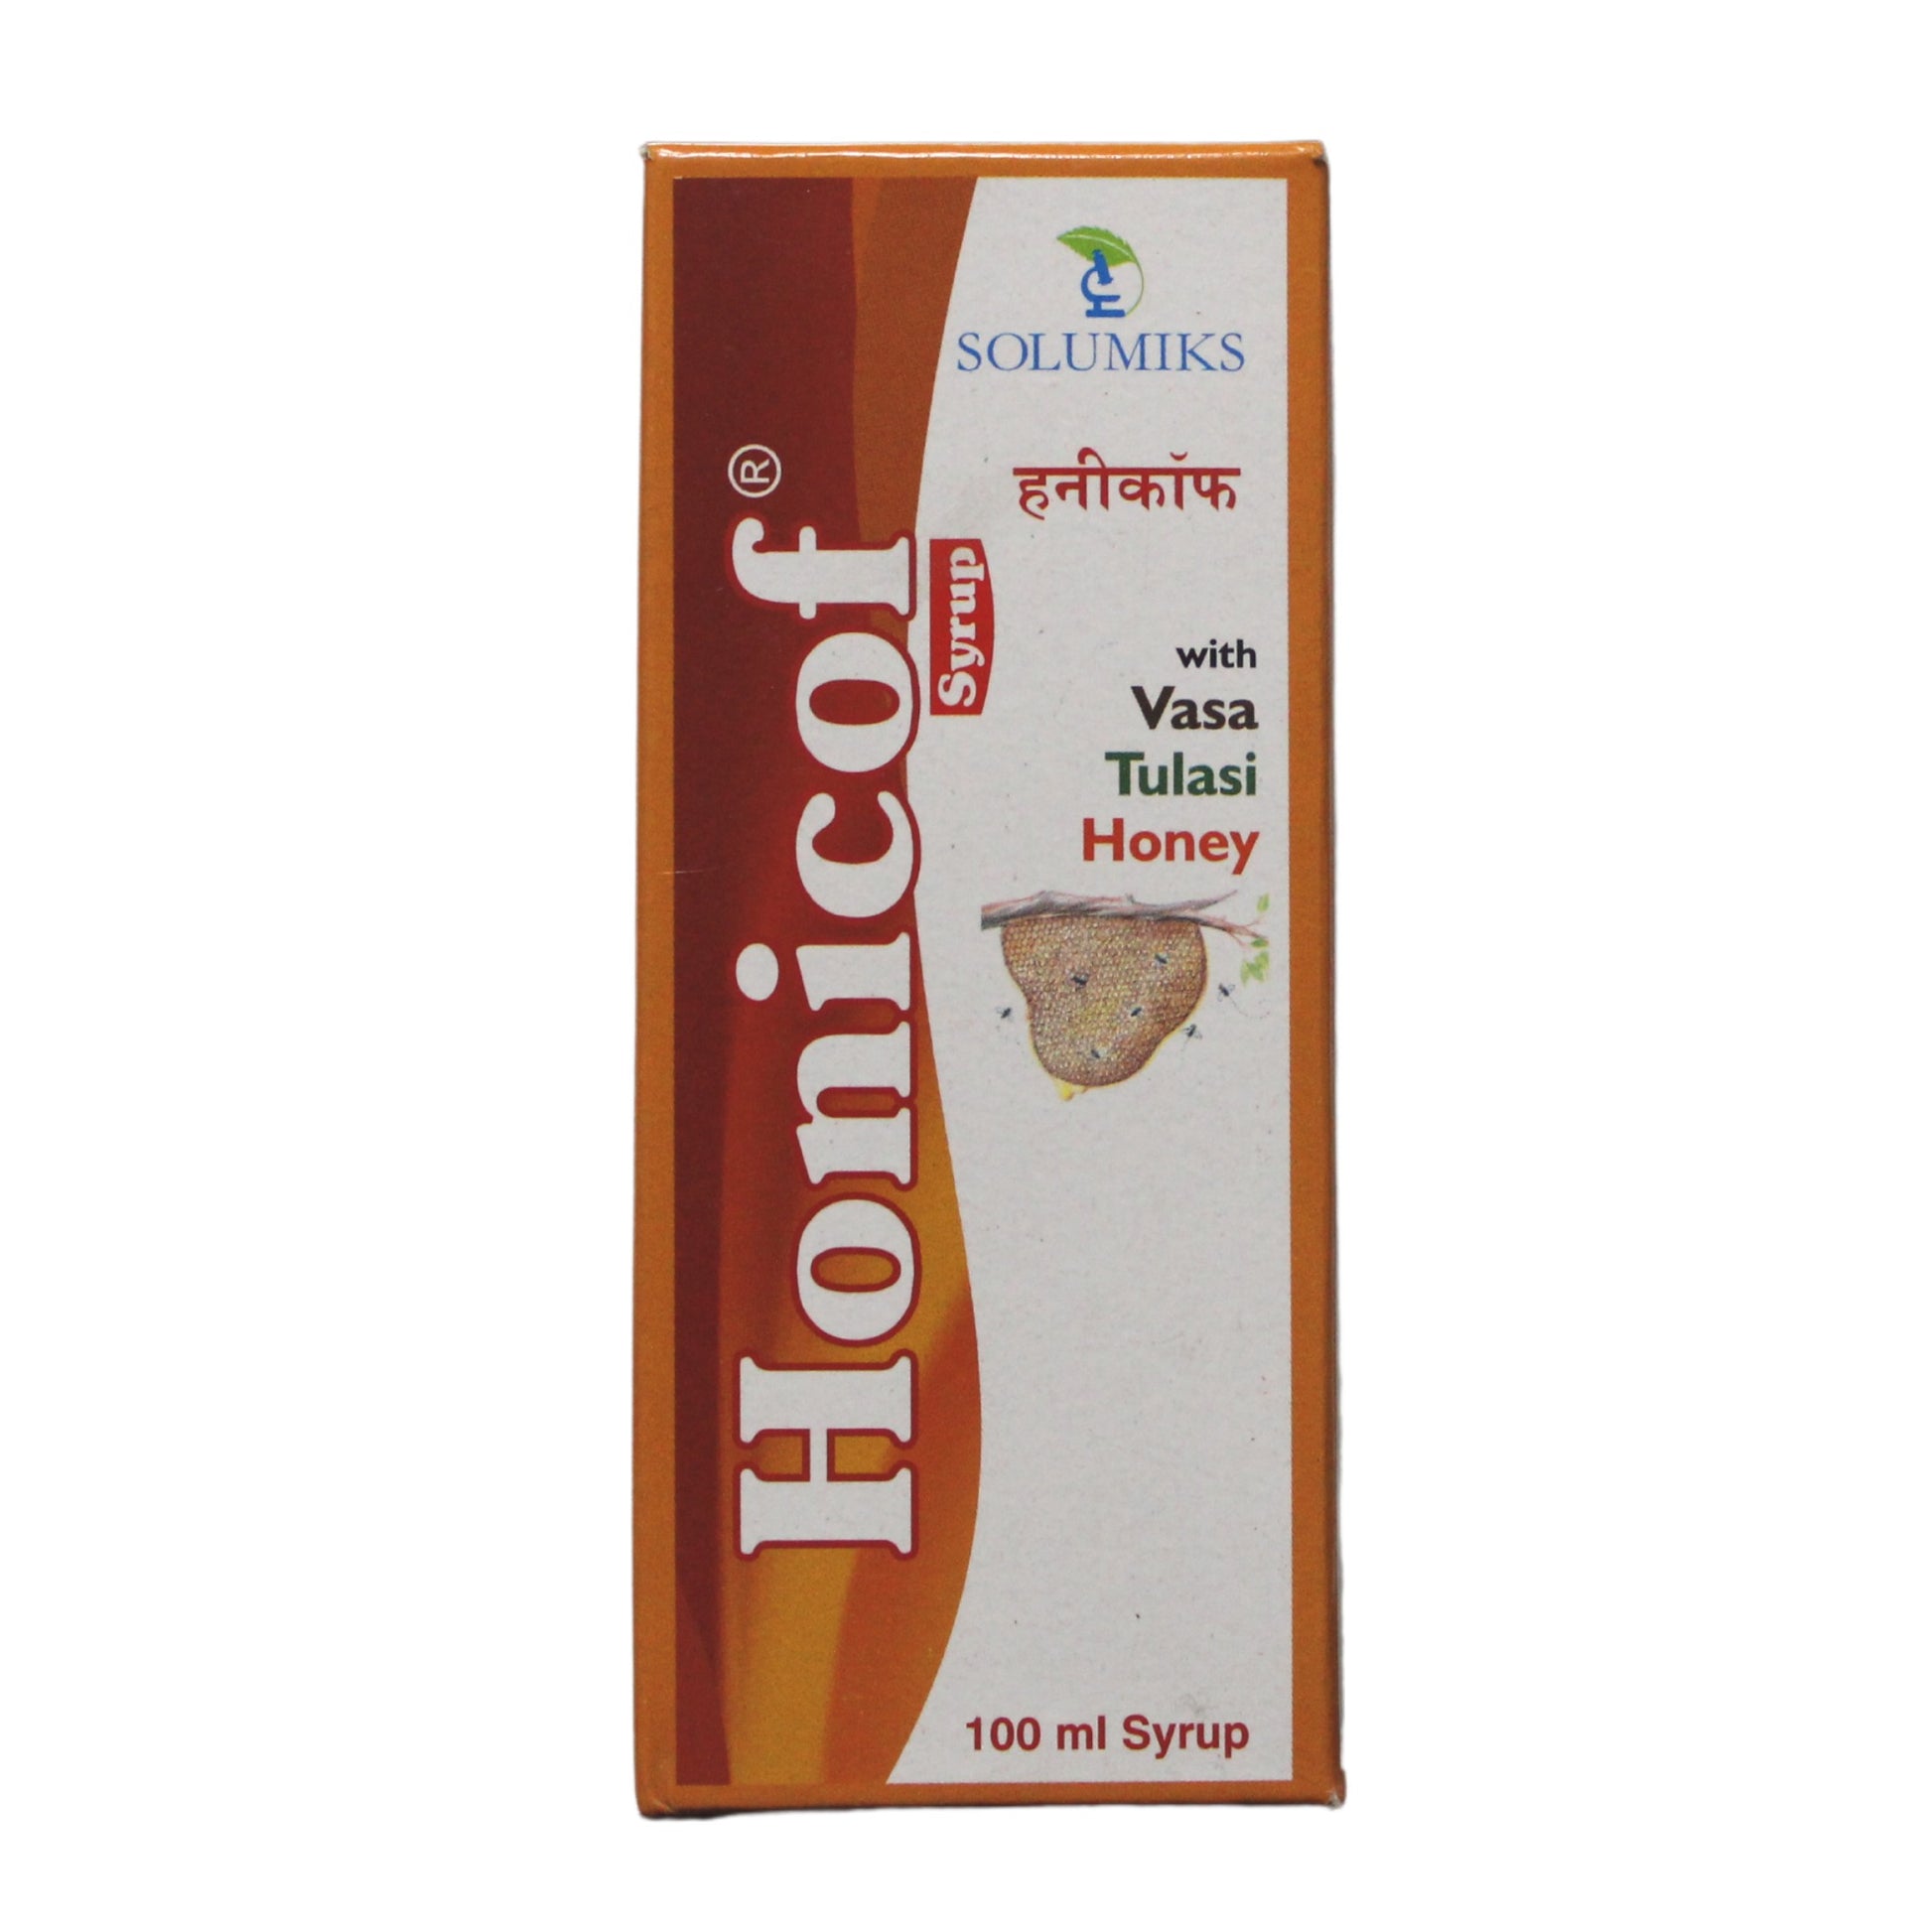 Honicof syrup 100ml Solumiks